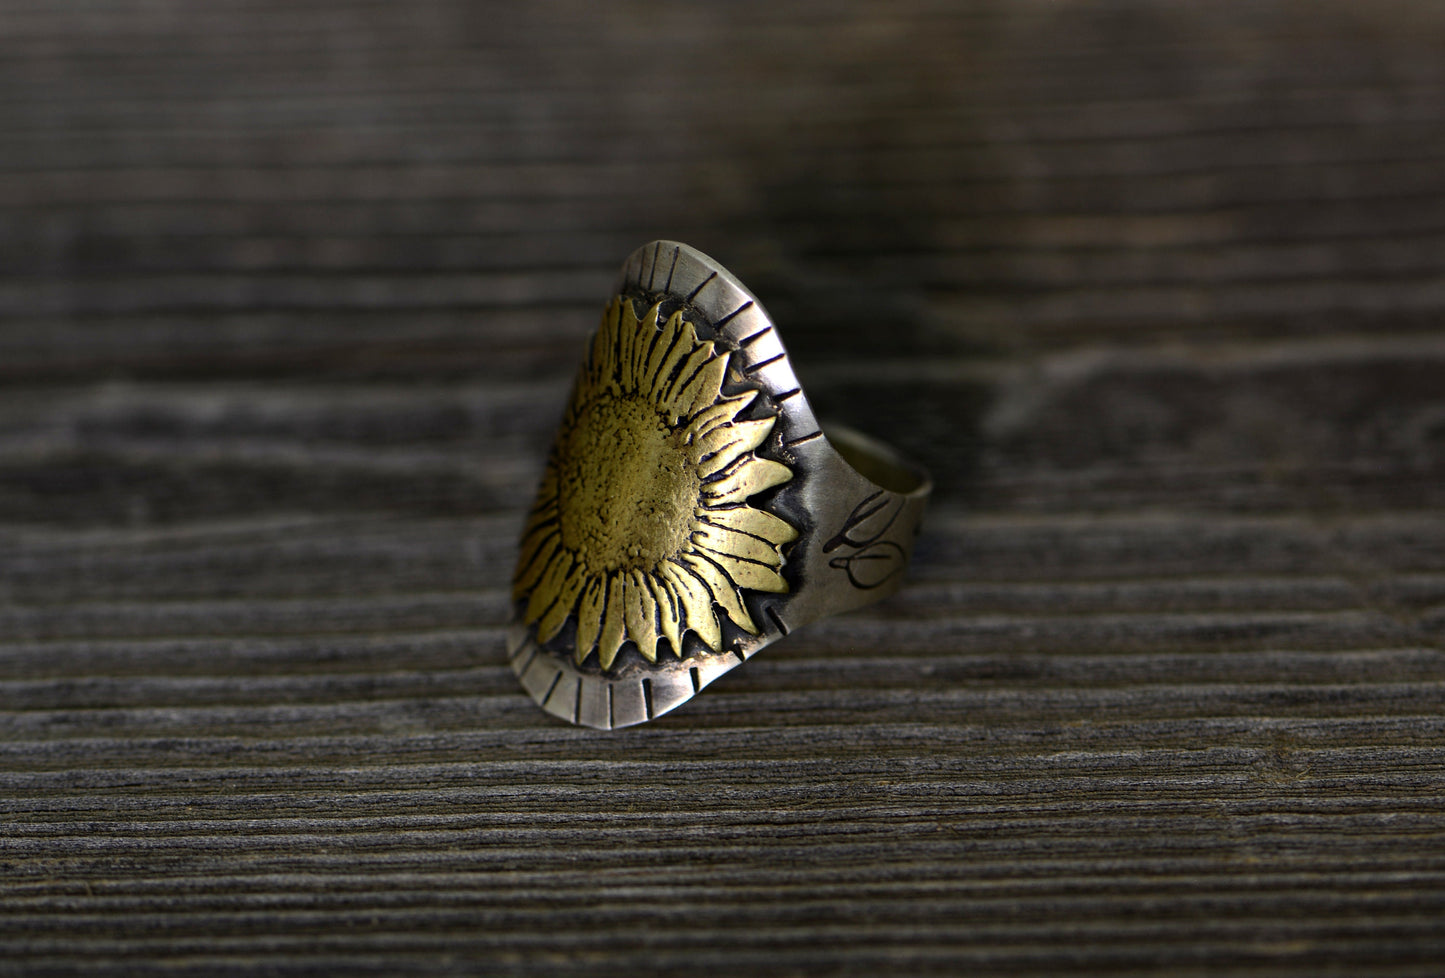 Brass sunflower on sterling silver custom saddle ring or cigar ring